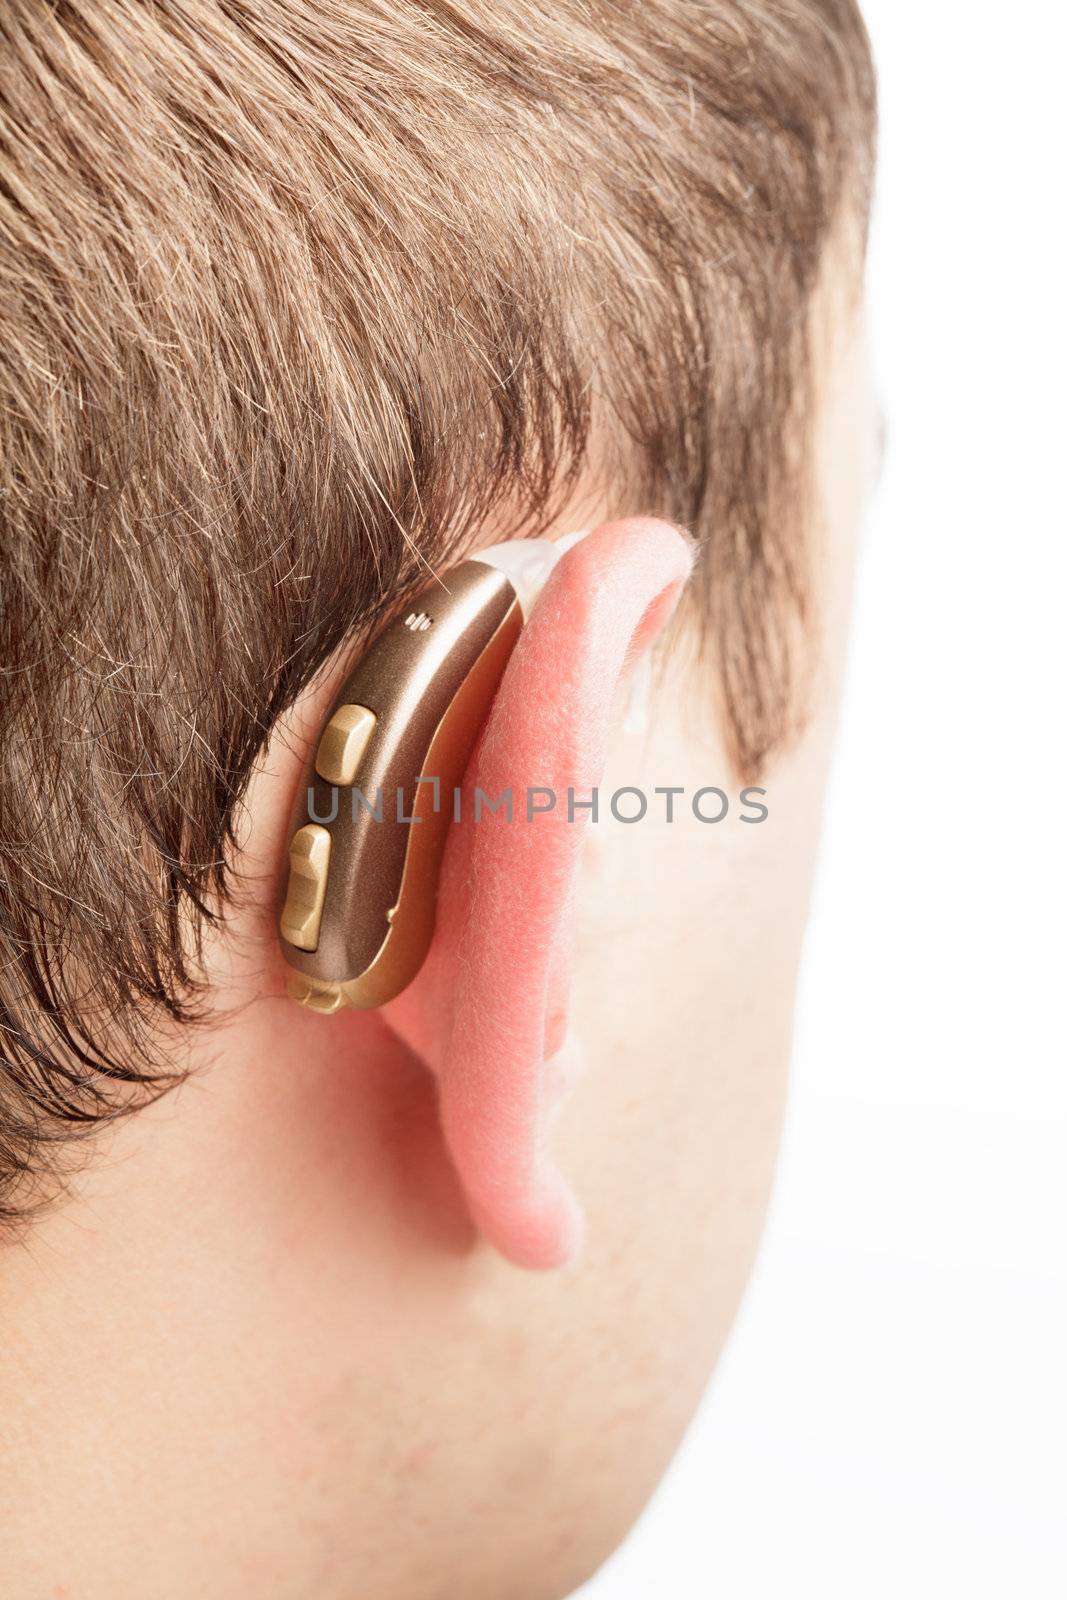 Hearing aid on the man's ear closeup